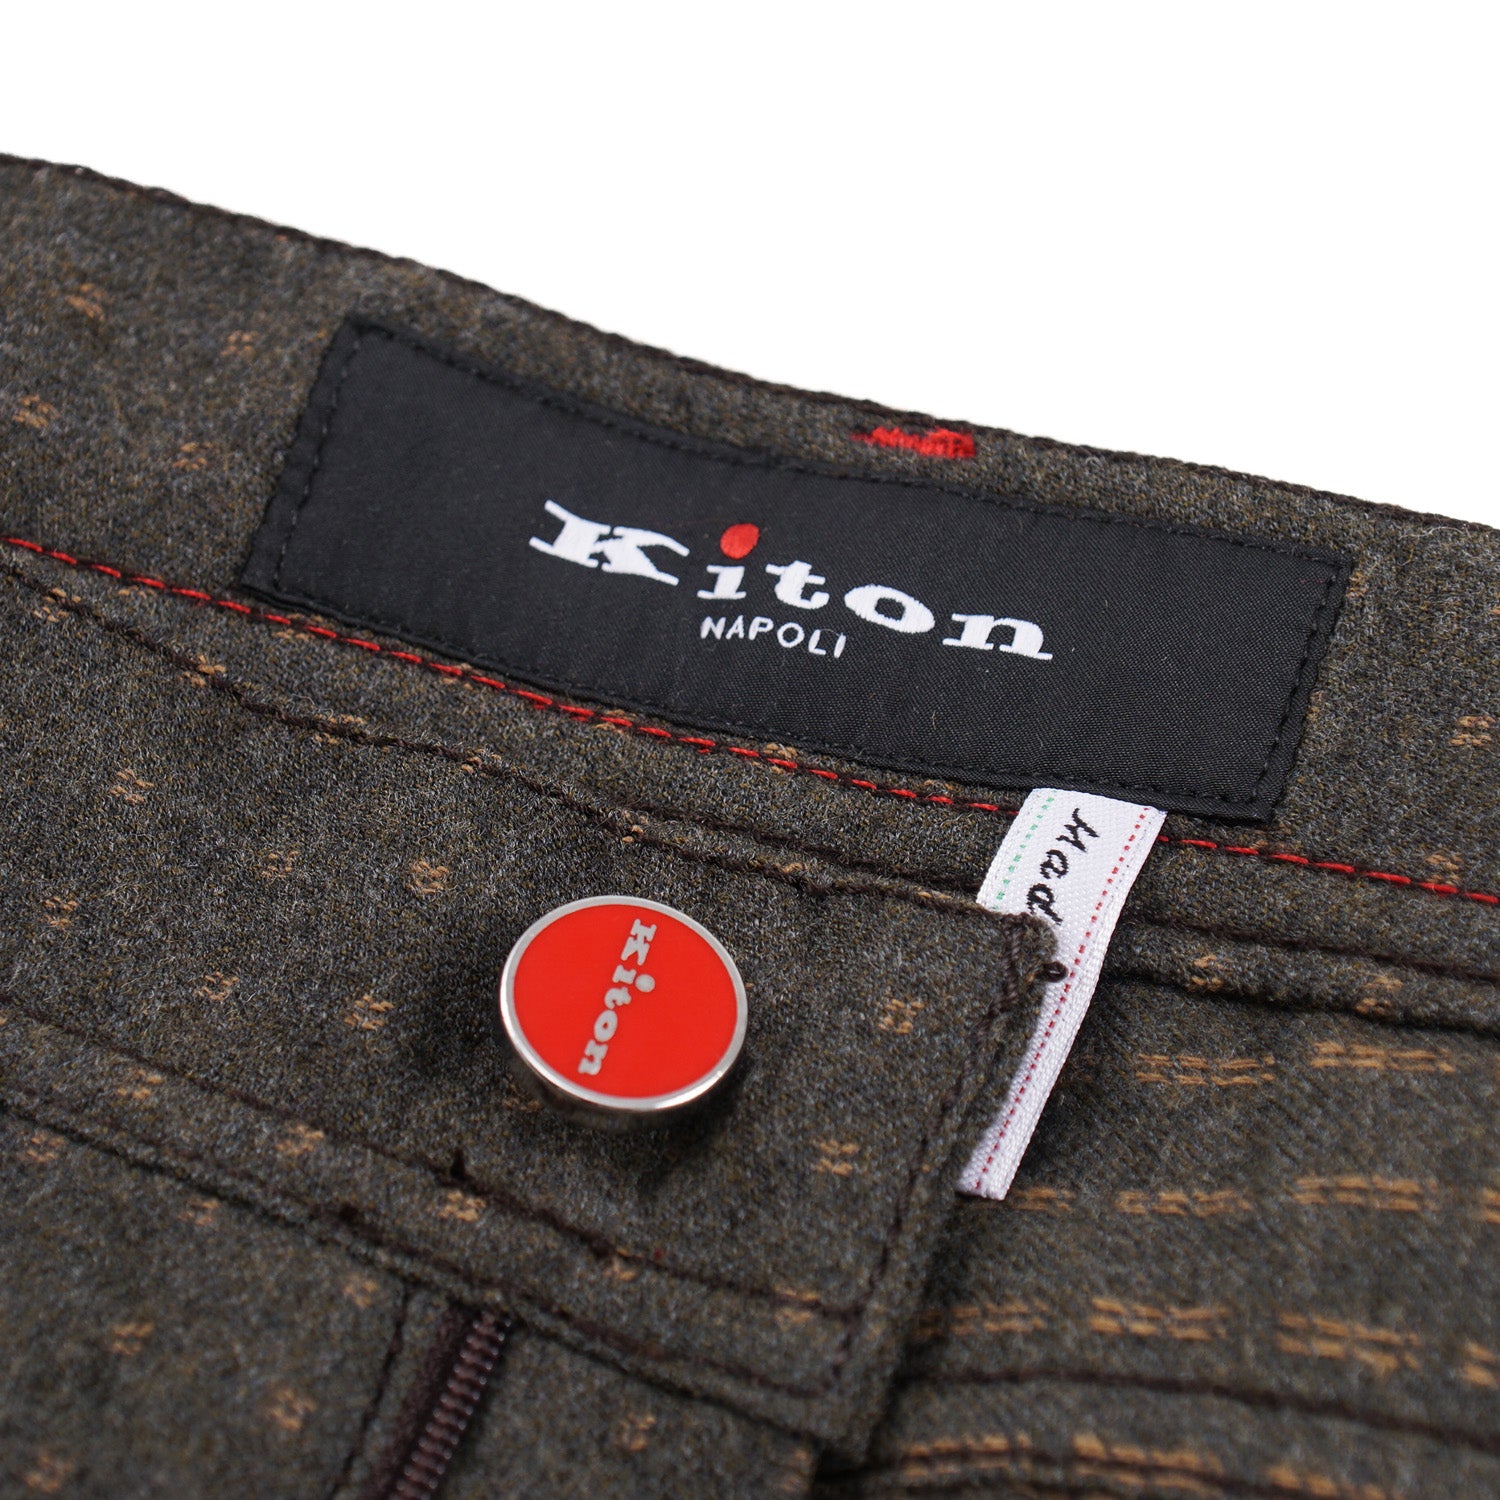 Kiton Slim Fit Five-Pocket Patterned Wool Pants - Top Shelf Apparel